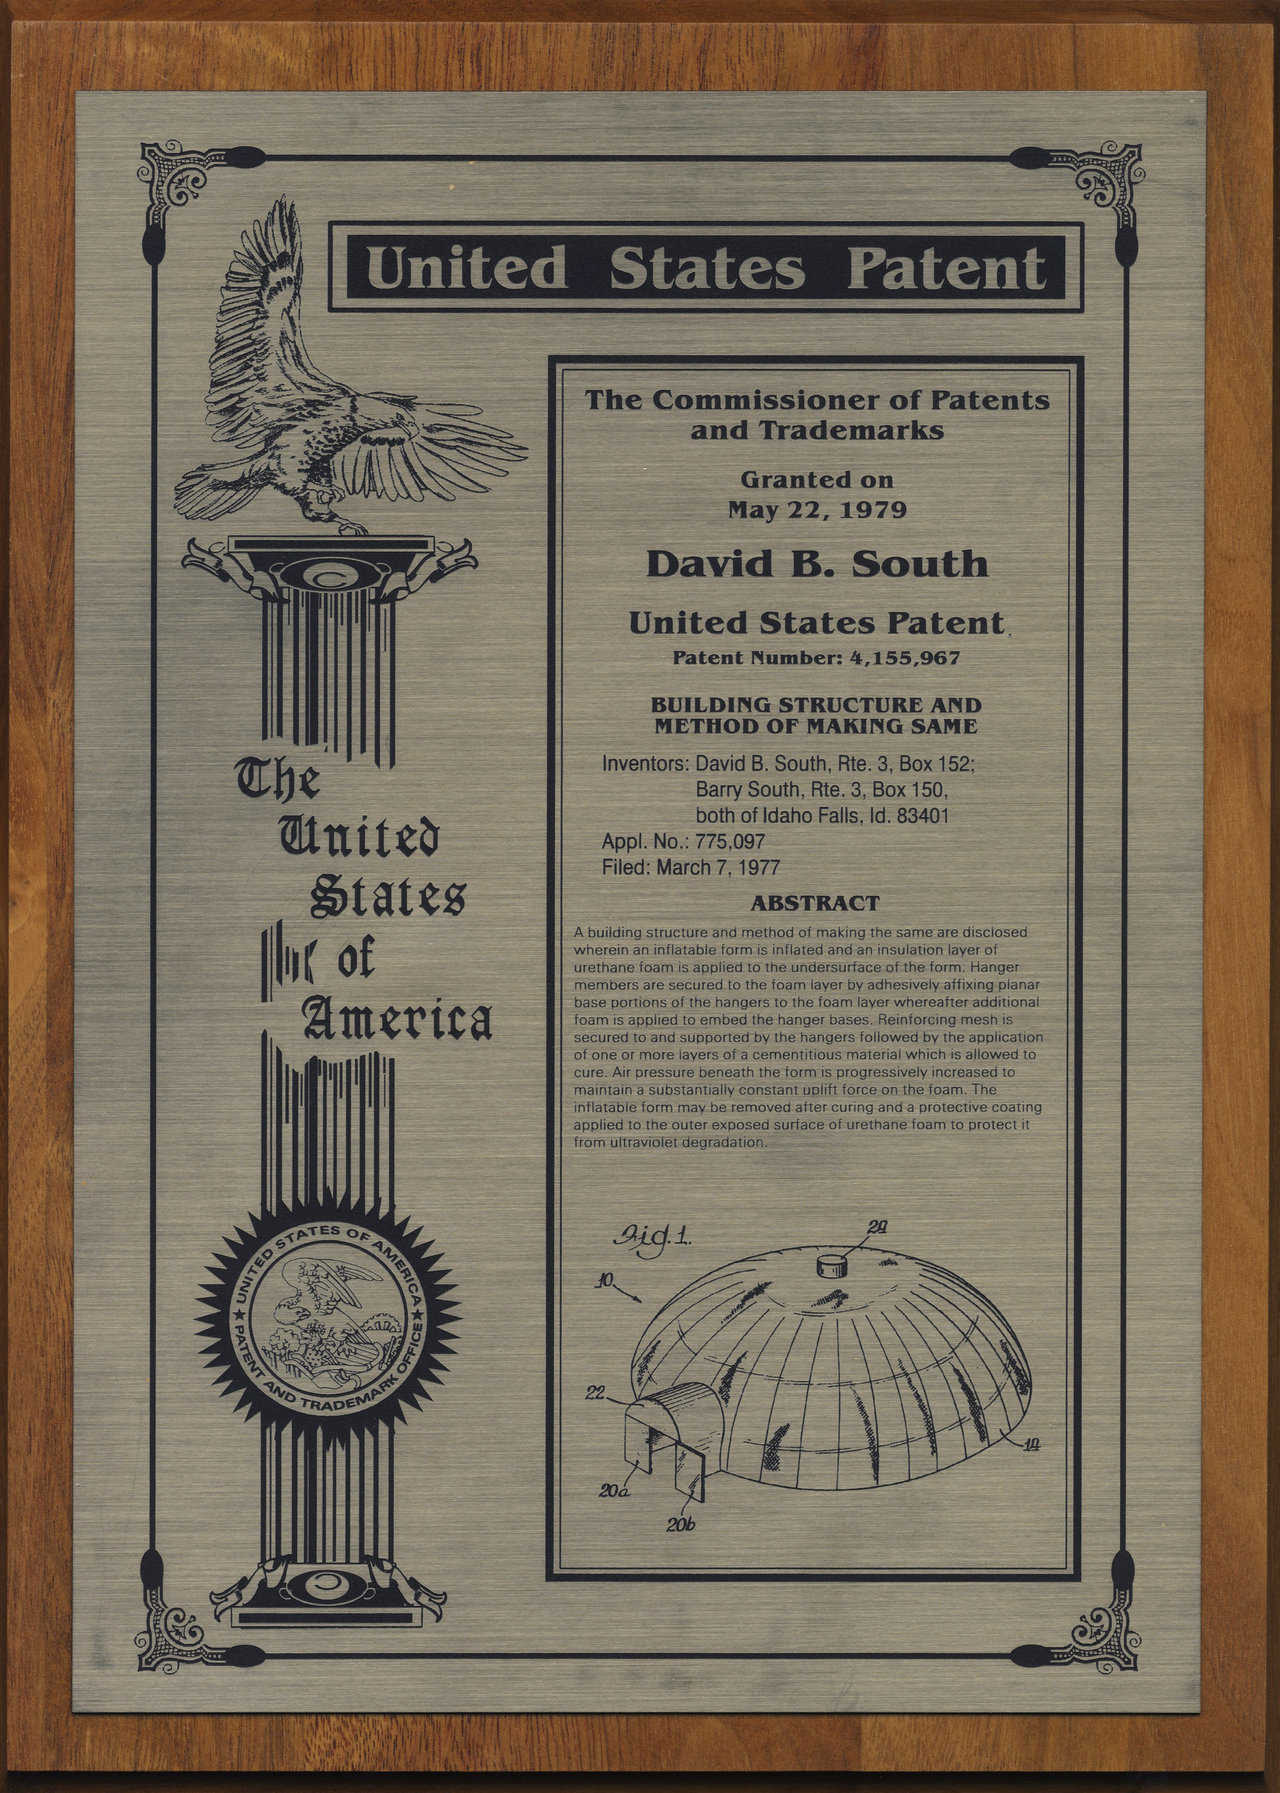 U.S. Patent #4,155,967